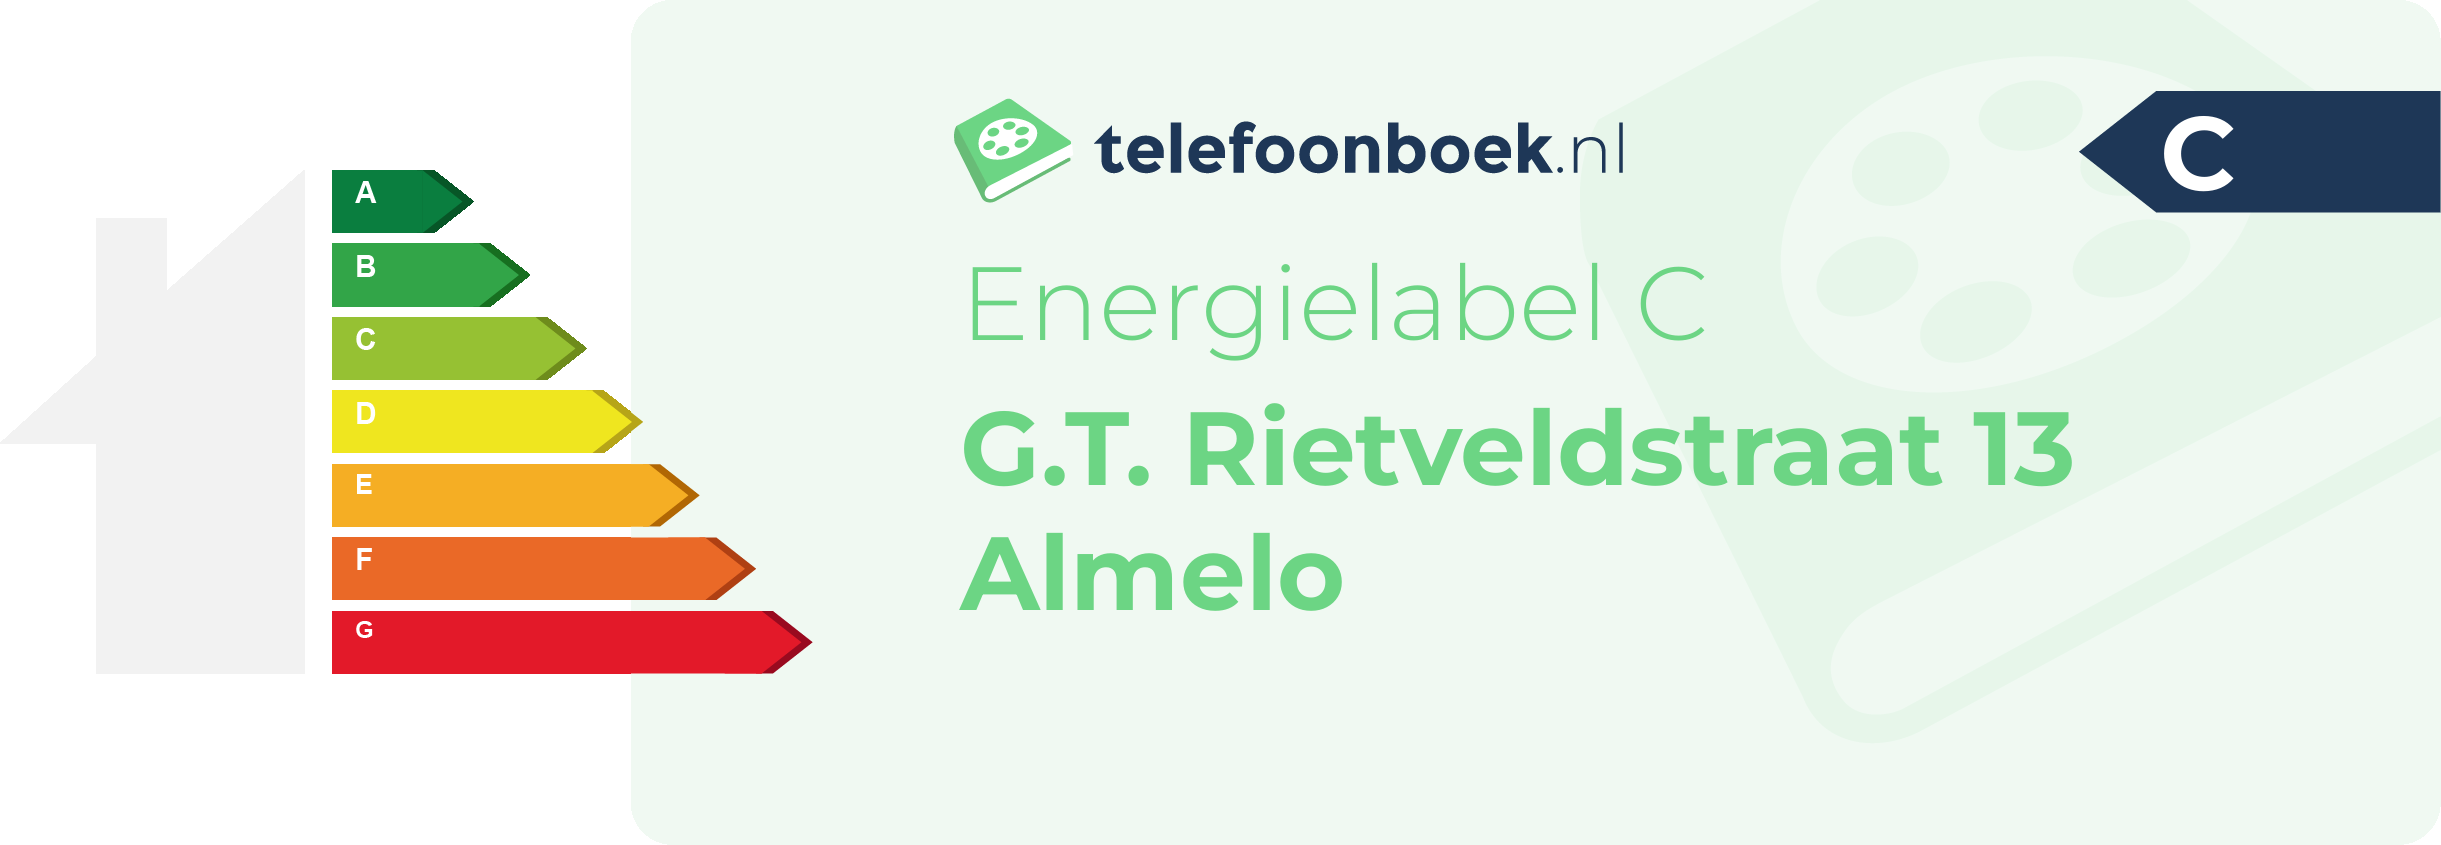 Energielabel G.T. Rietveldstraat 13 Almelo